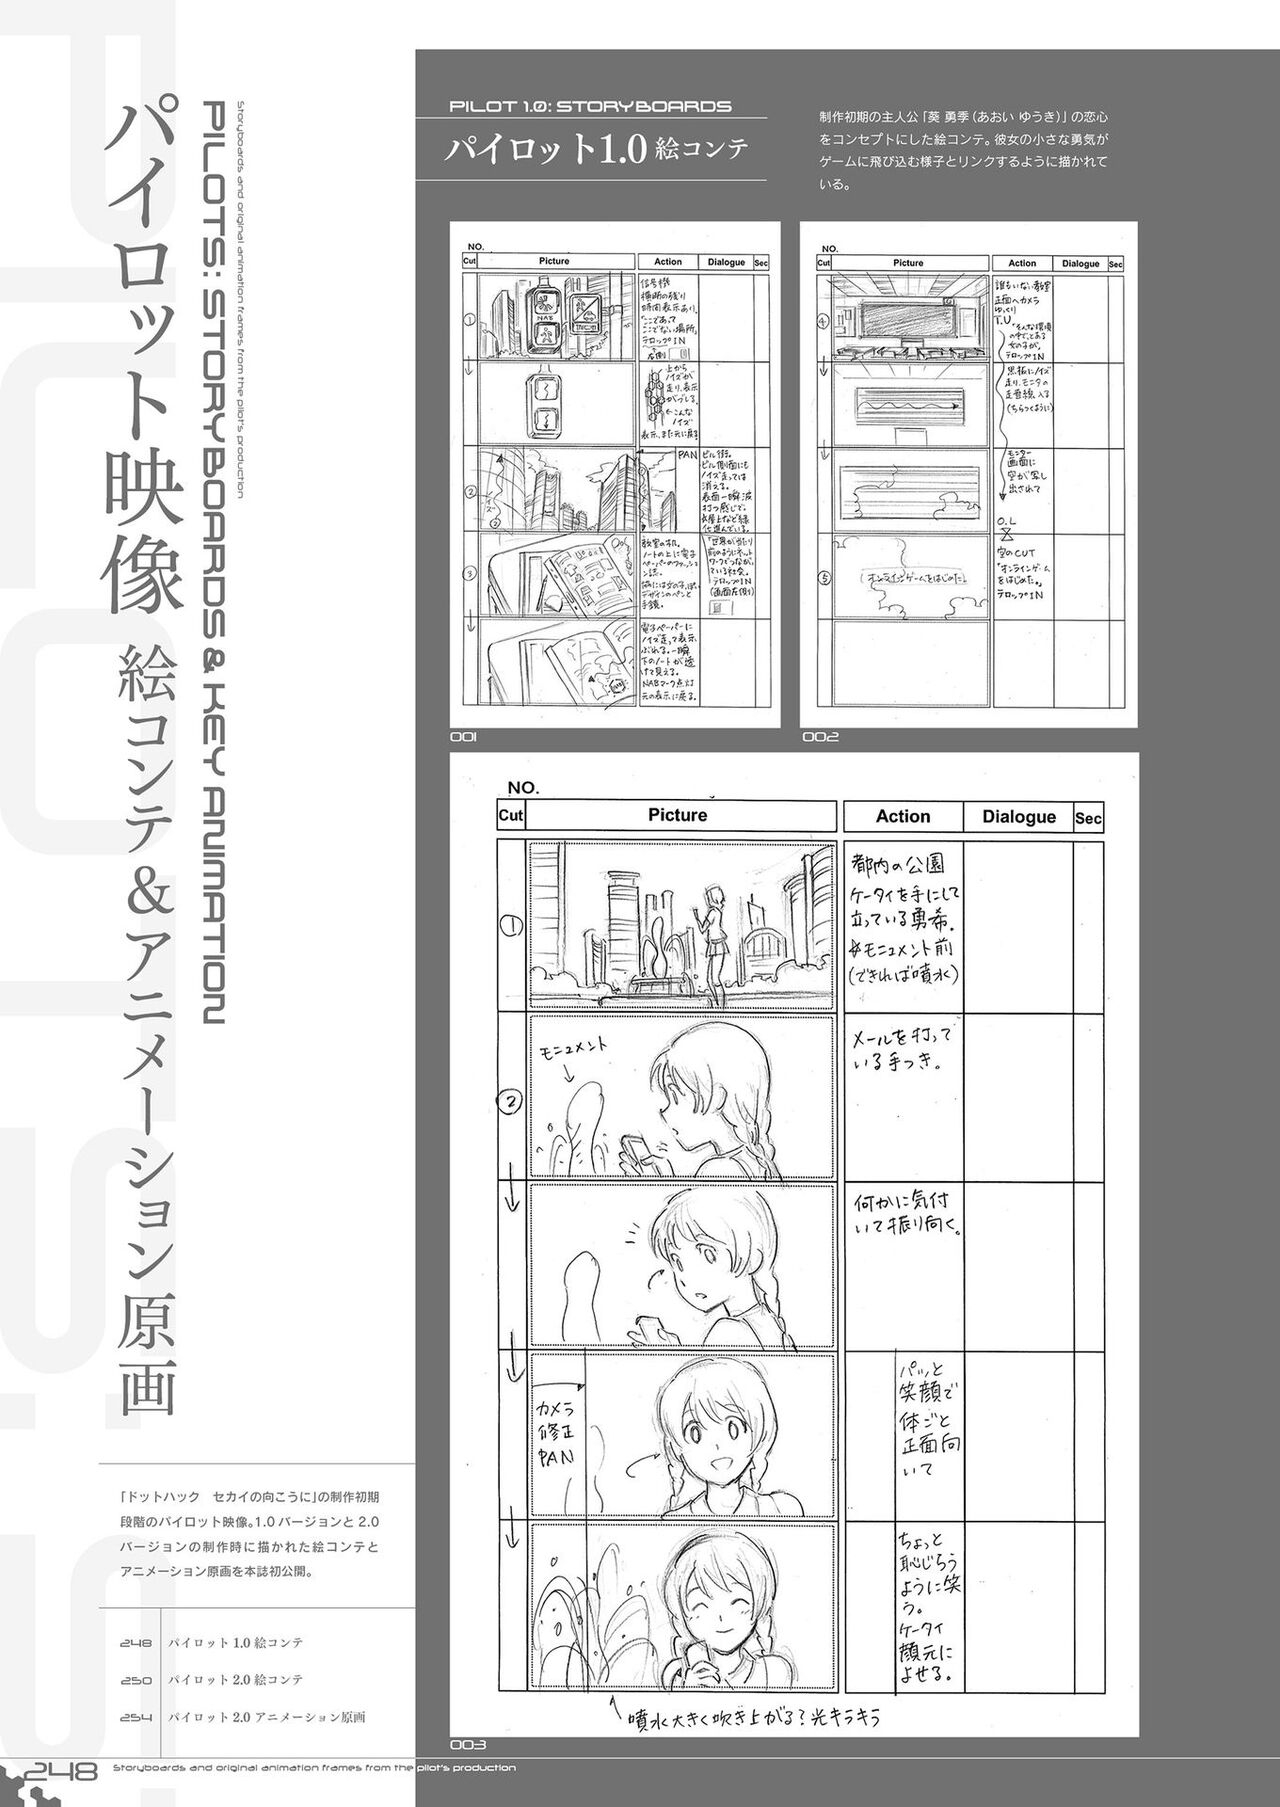 Dot Hack Sekai-no Muko ni  +Versus Complete Set  Documentation .hack //Archives _ 05 250